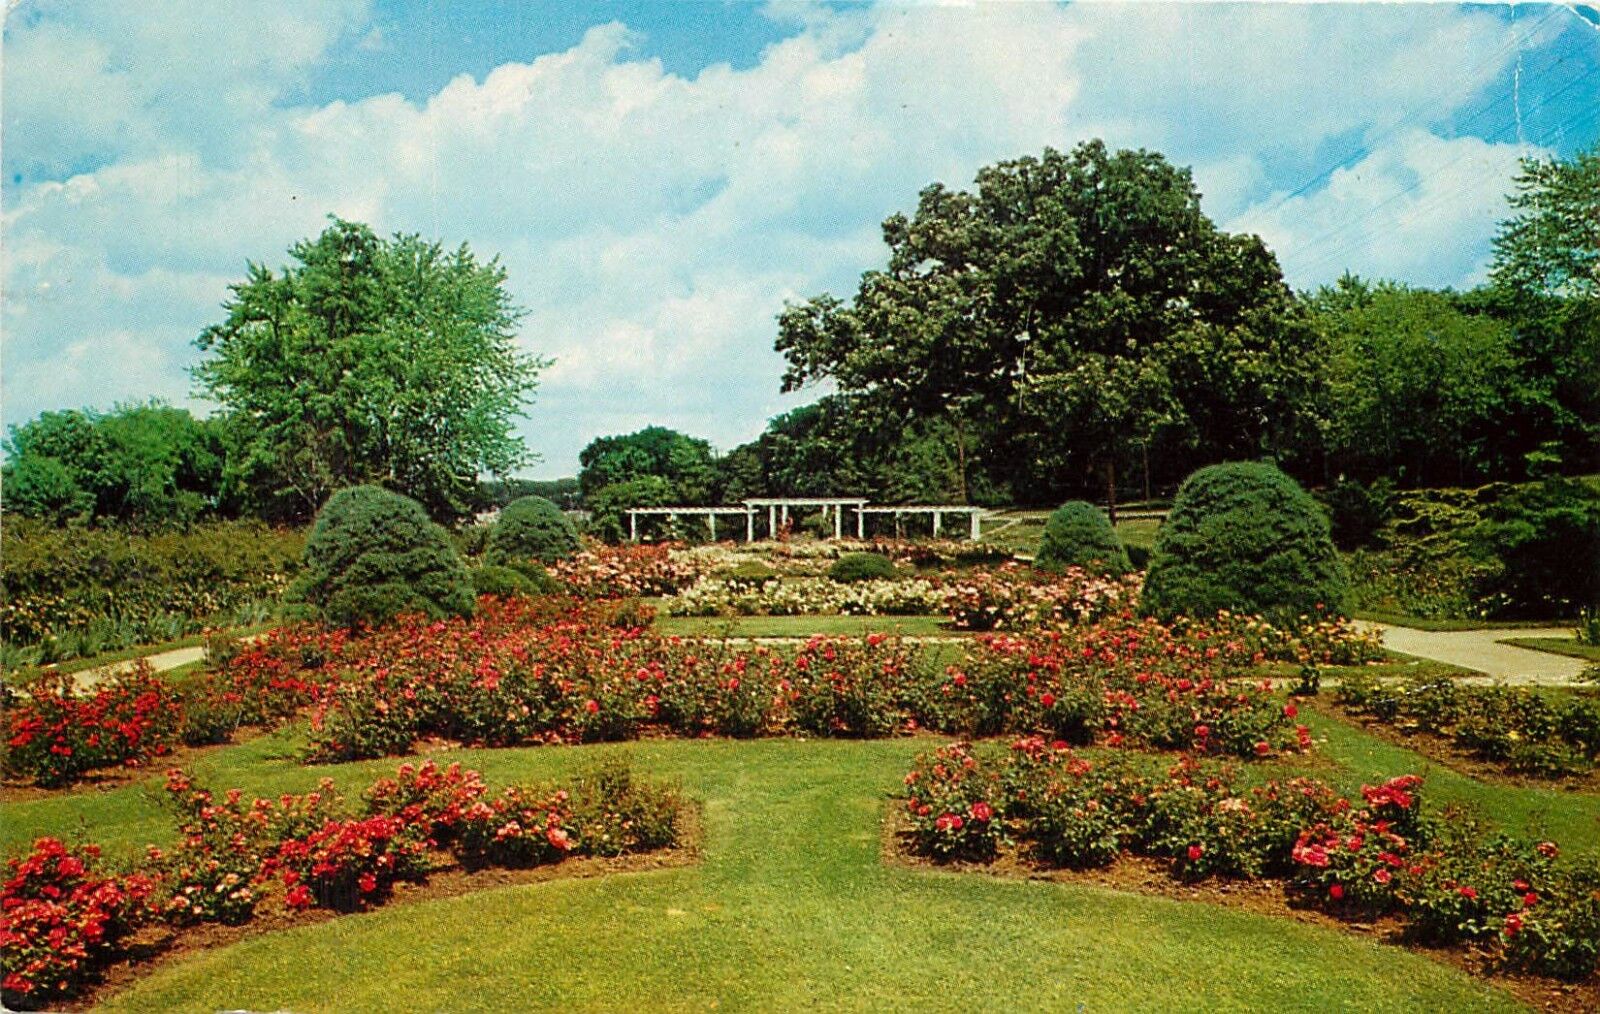 Flower Beds Sinnissippi Park Sunken Gardens Rockford Illinois IL 1960s Postcard